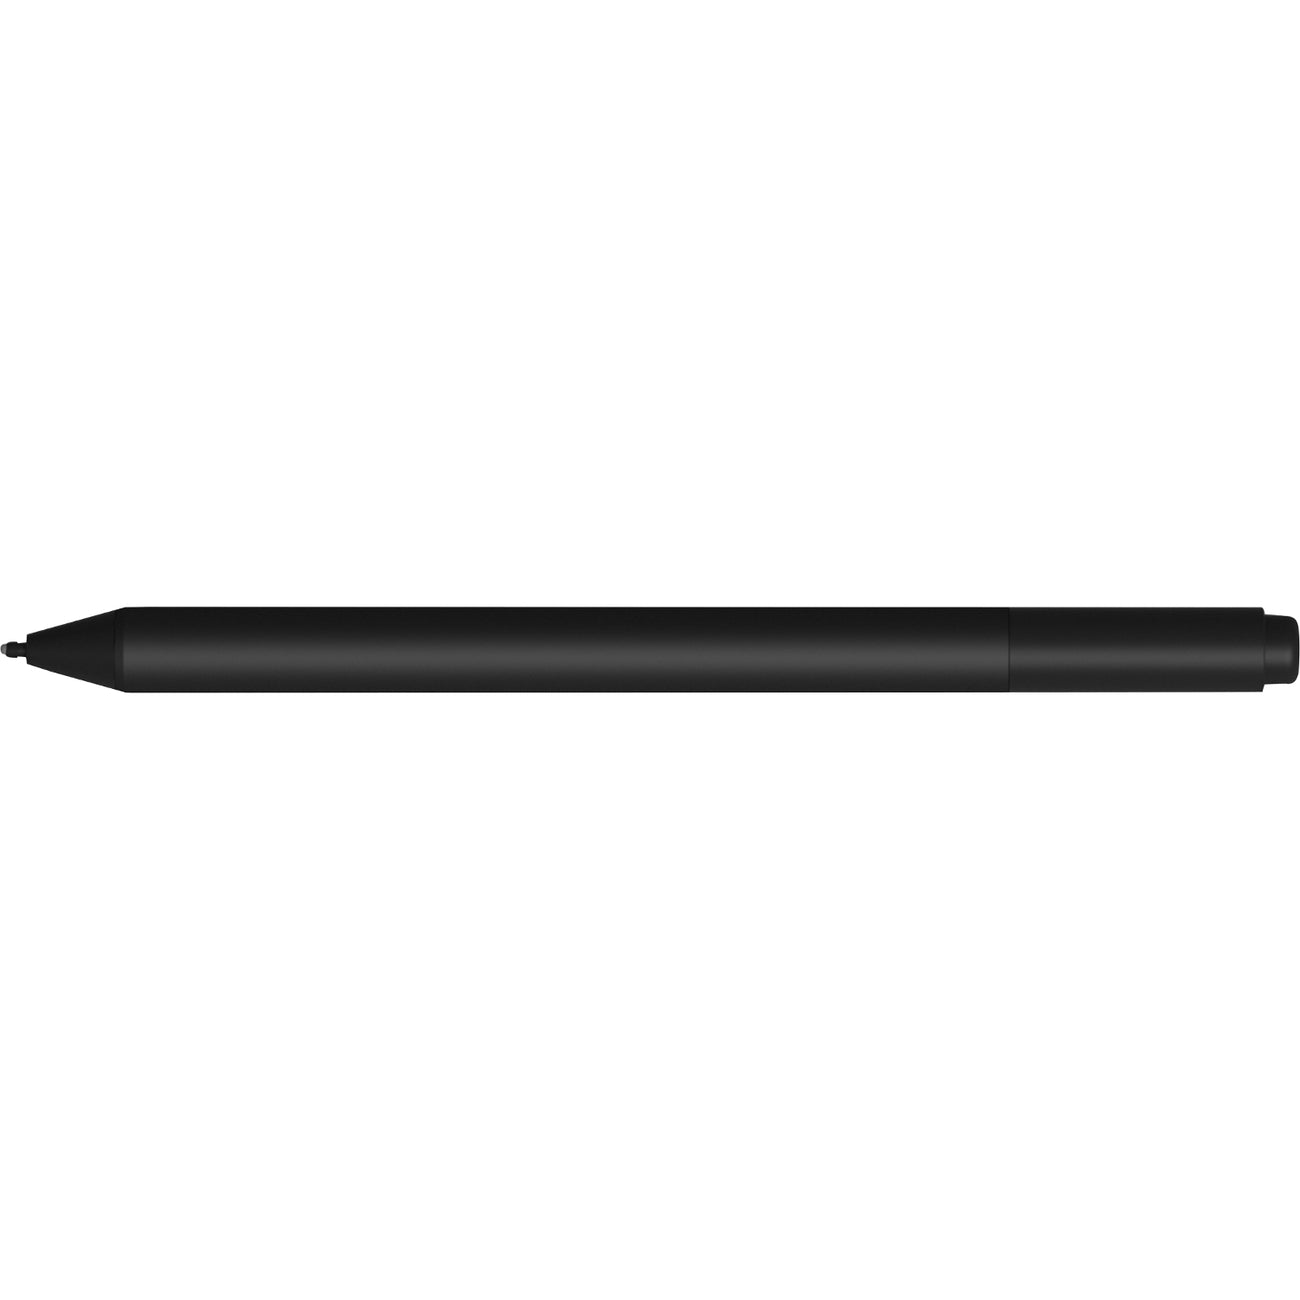 Microsoft Surface Pen SpadezStore